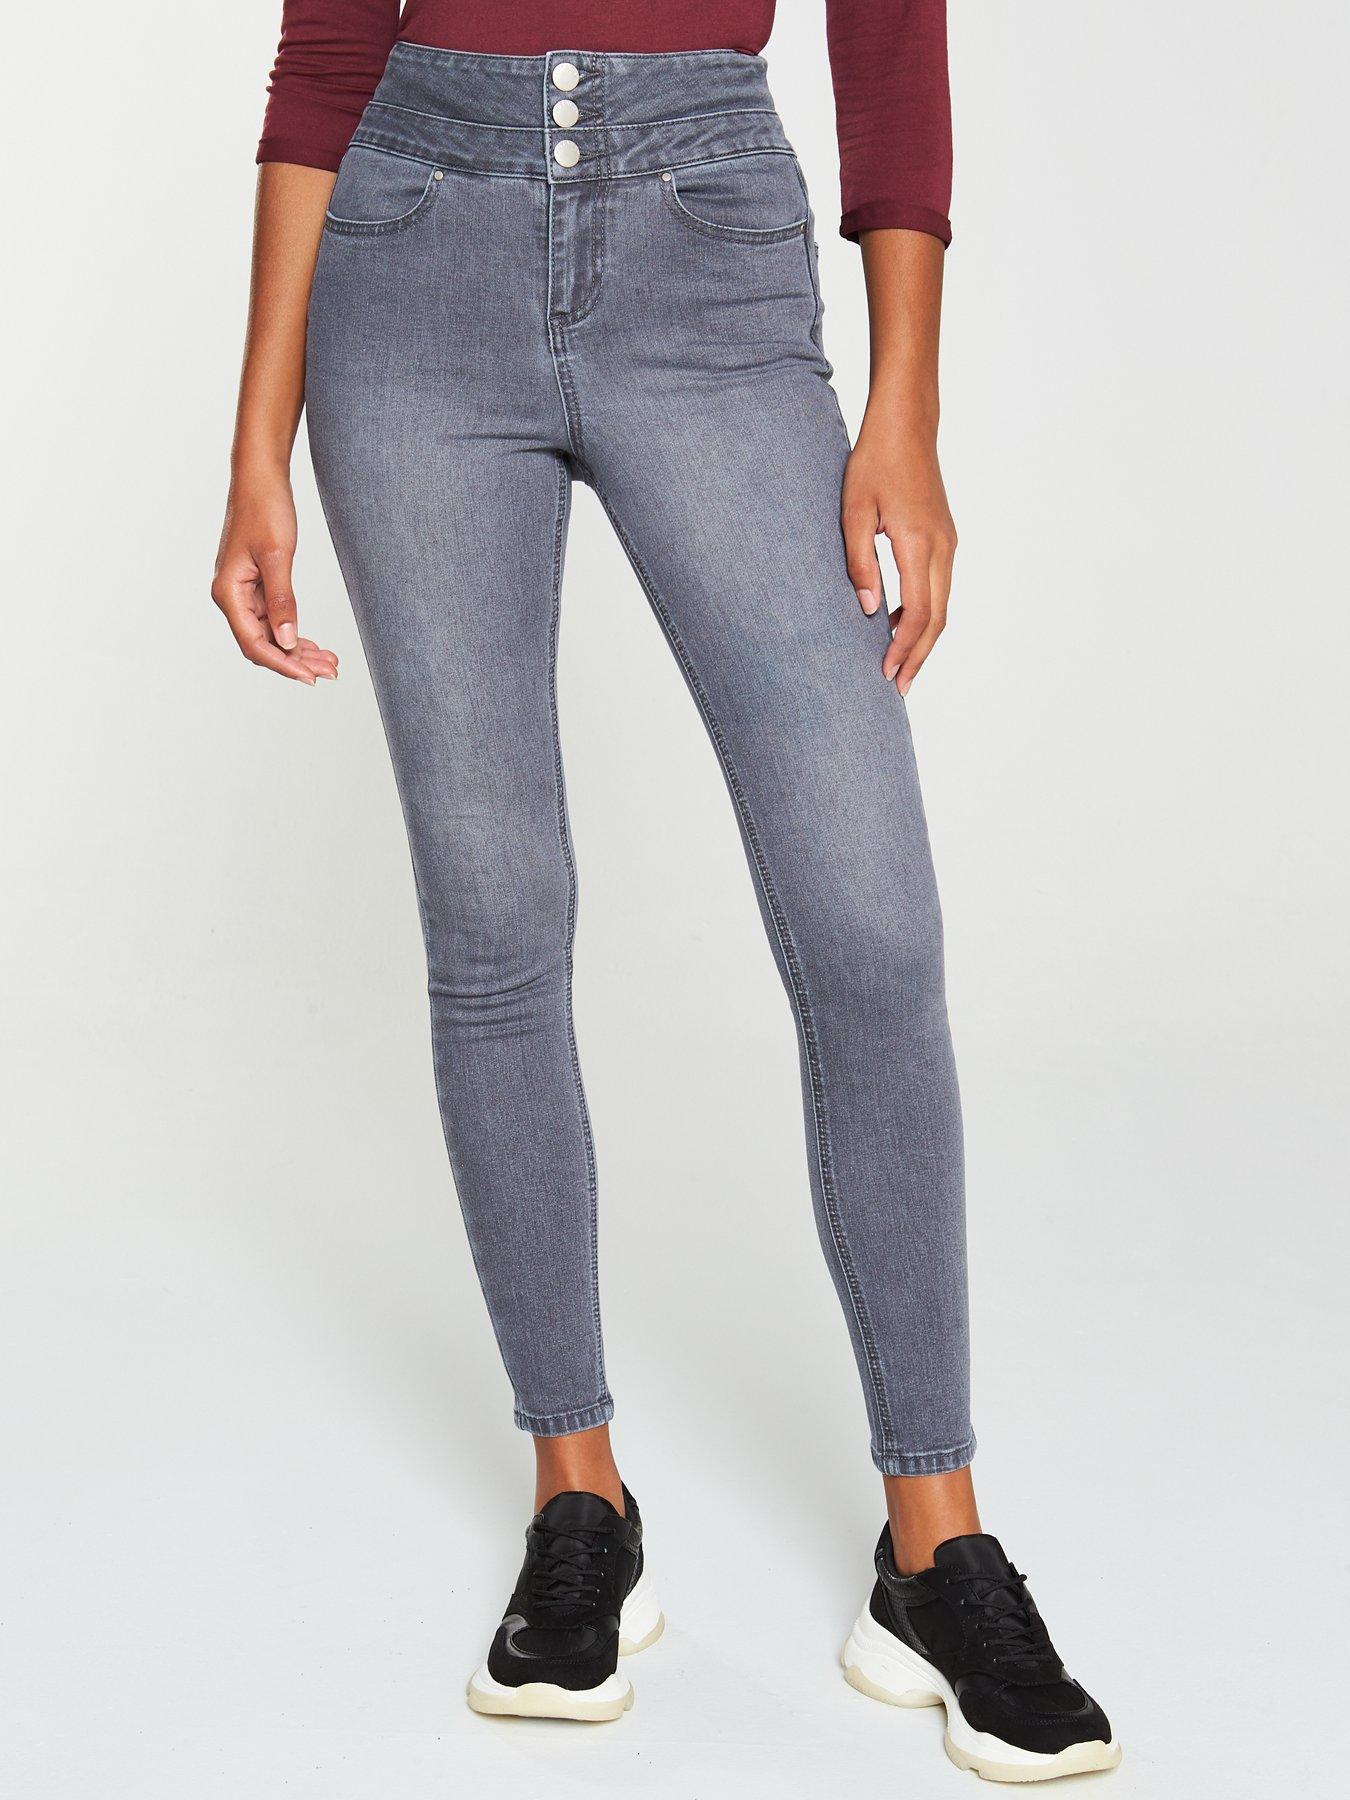 womens grey skinny jeans uk